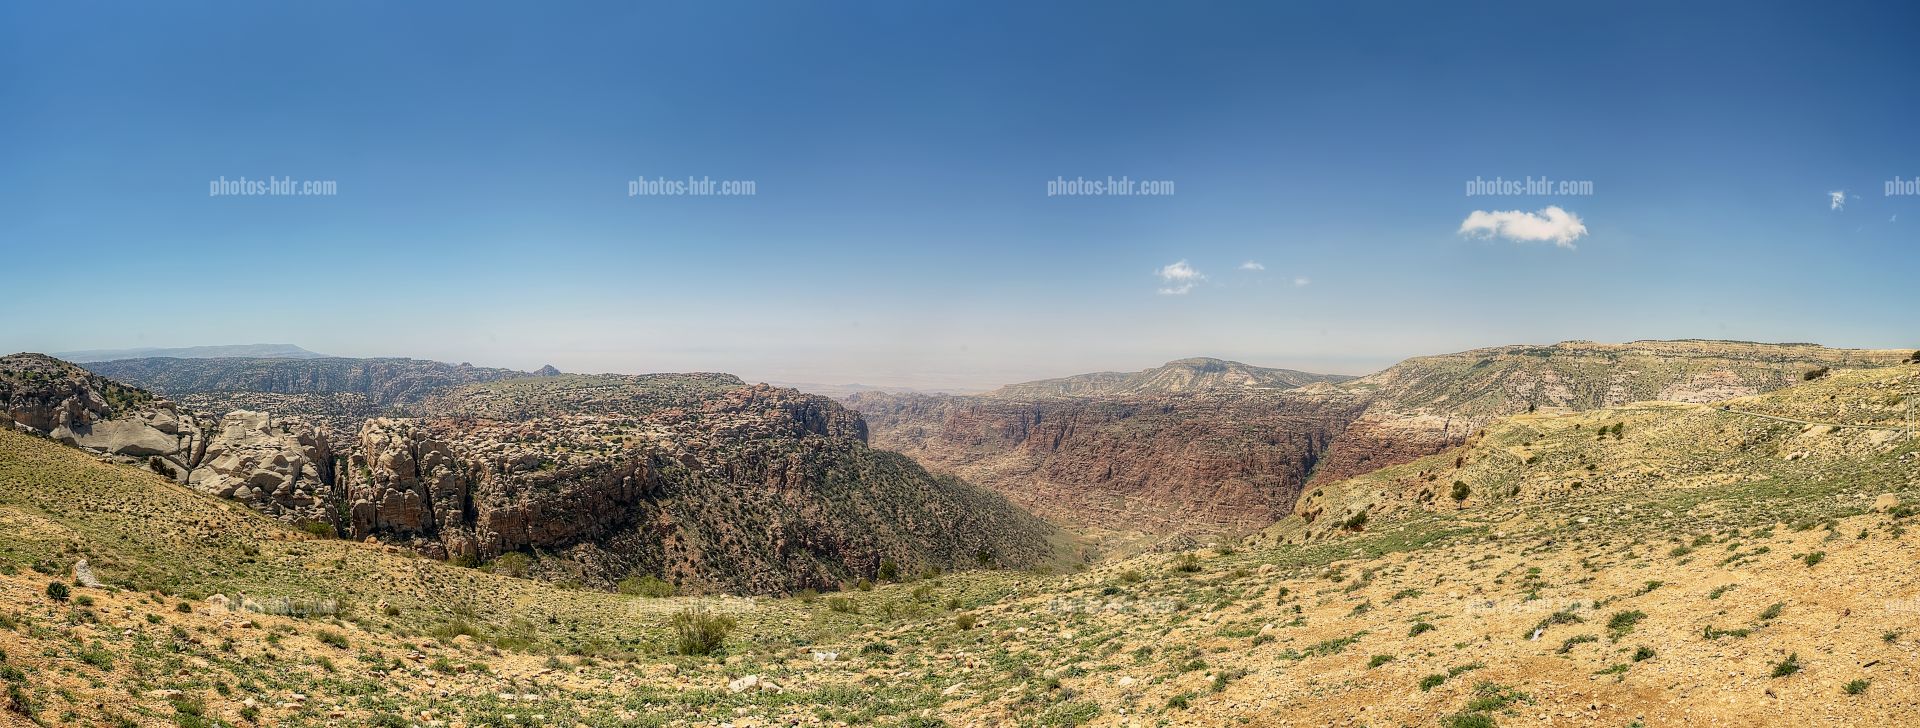 /Panoramique en Jordanie